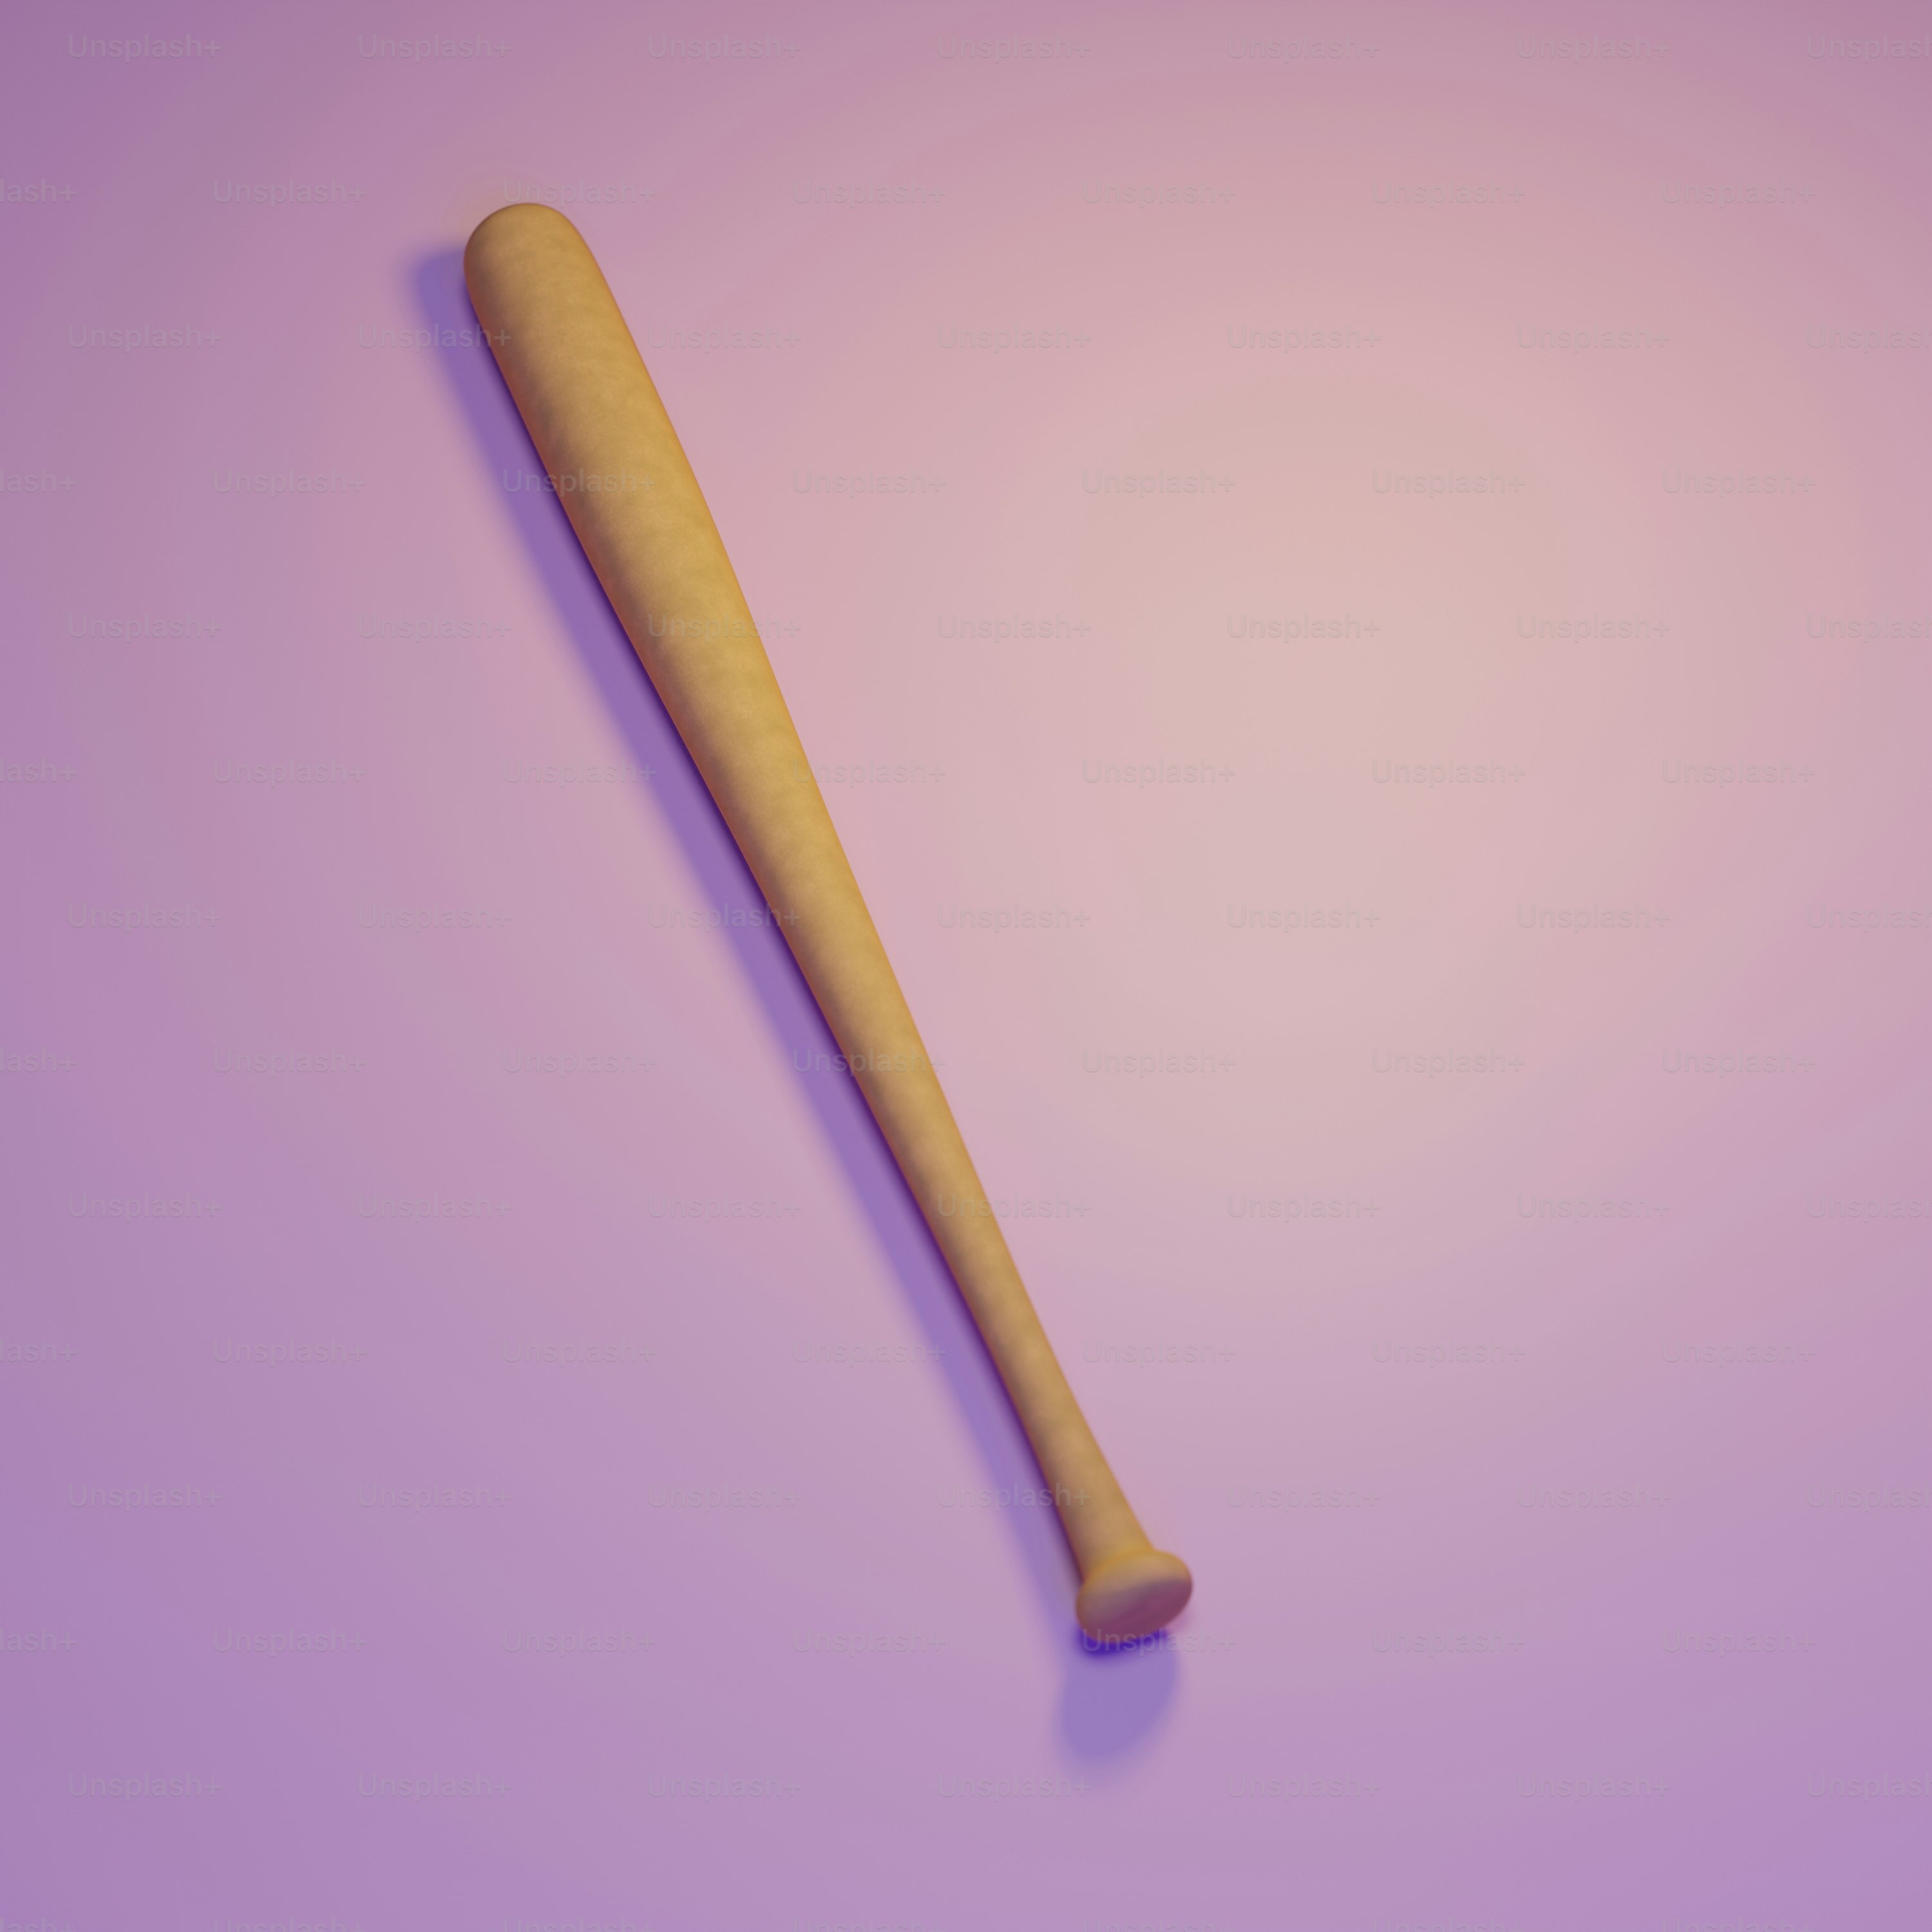 A wooden baseball bat on a purple background photo